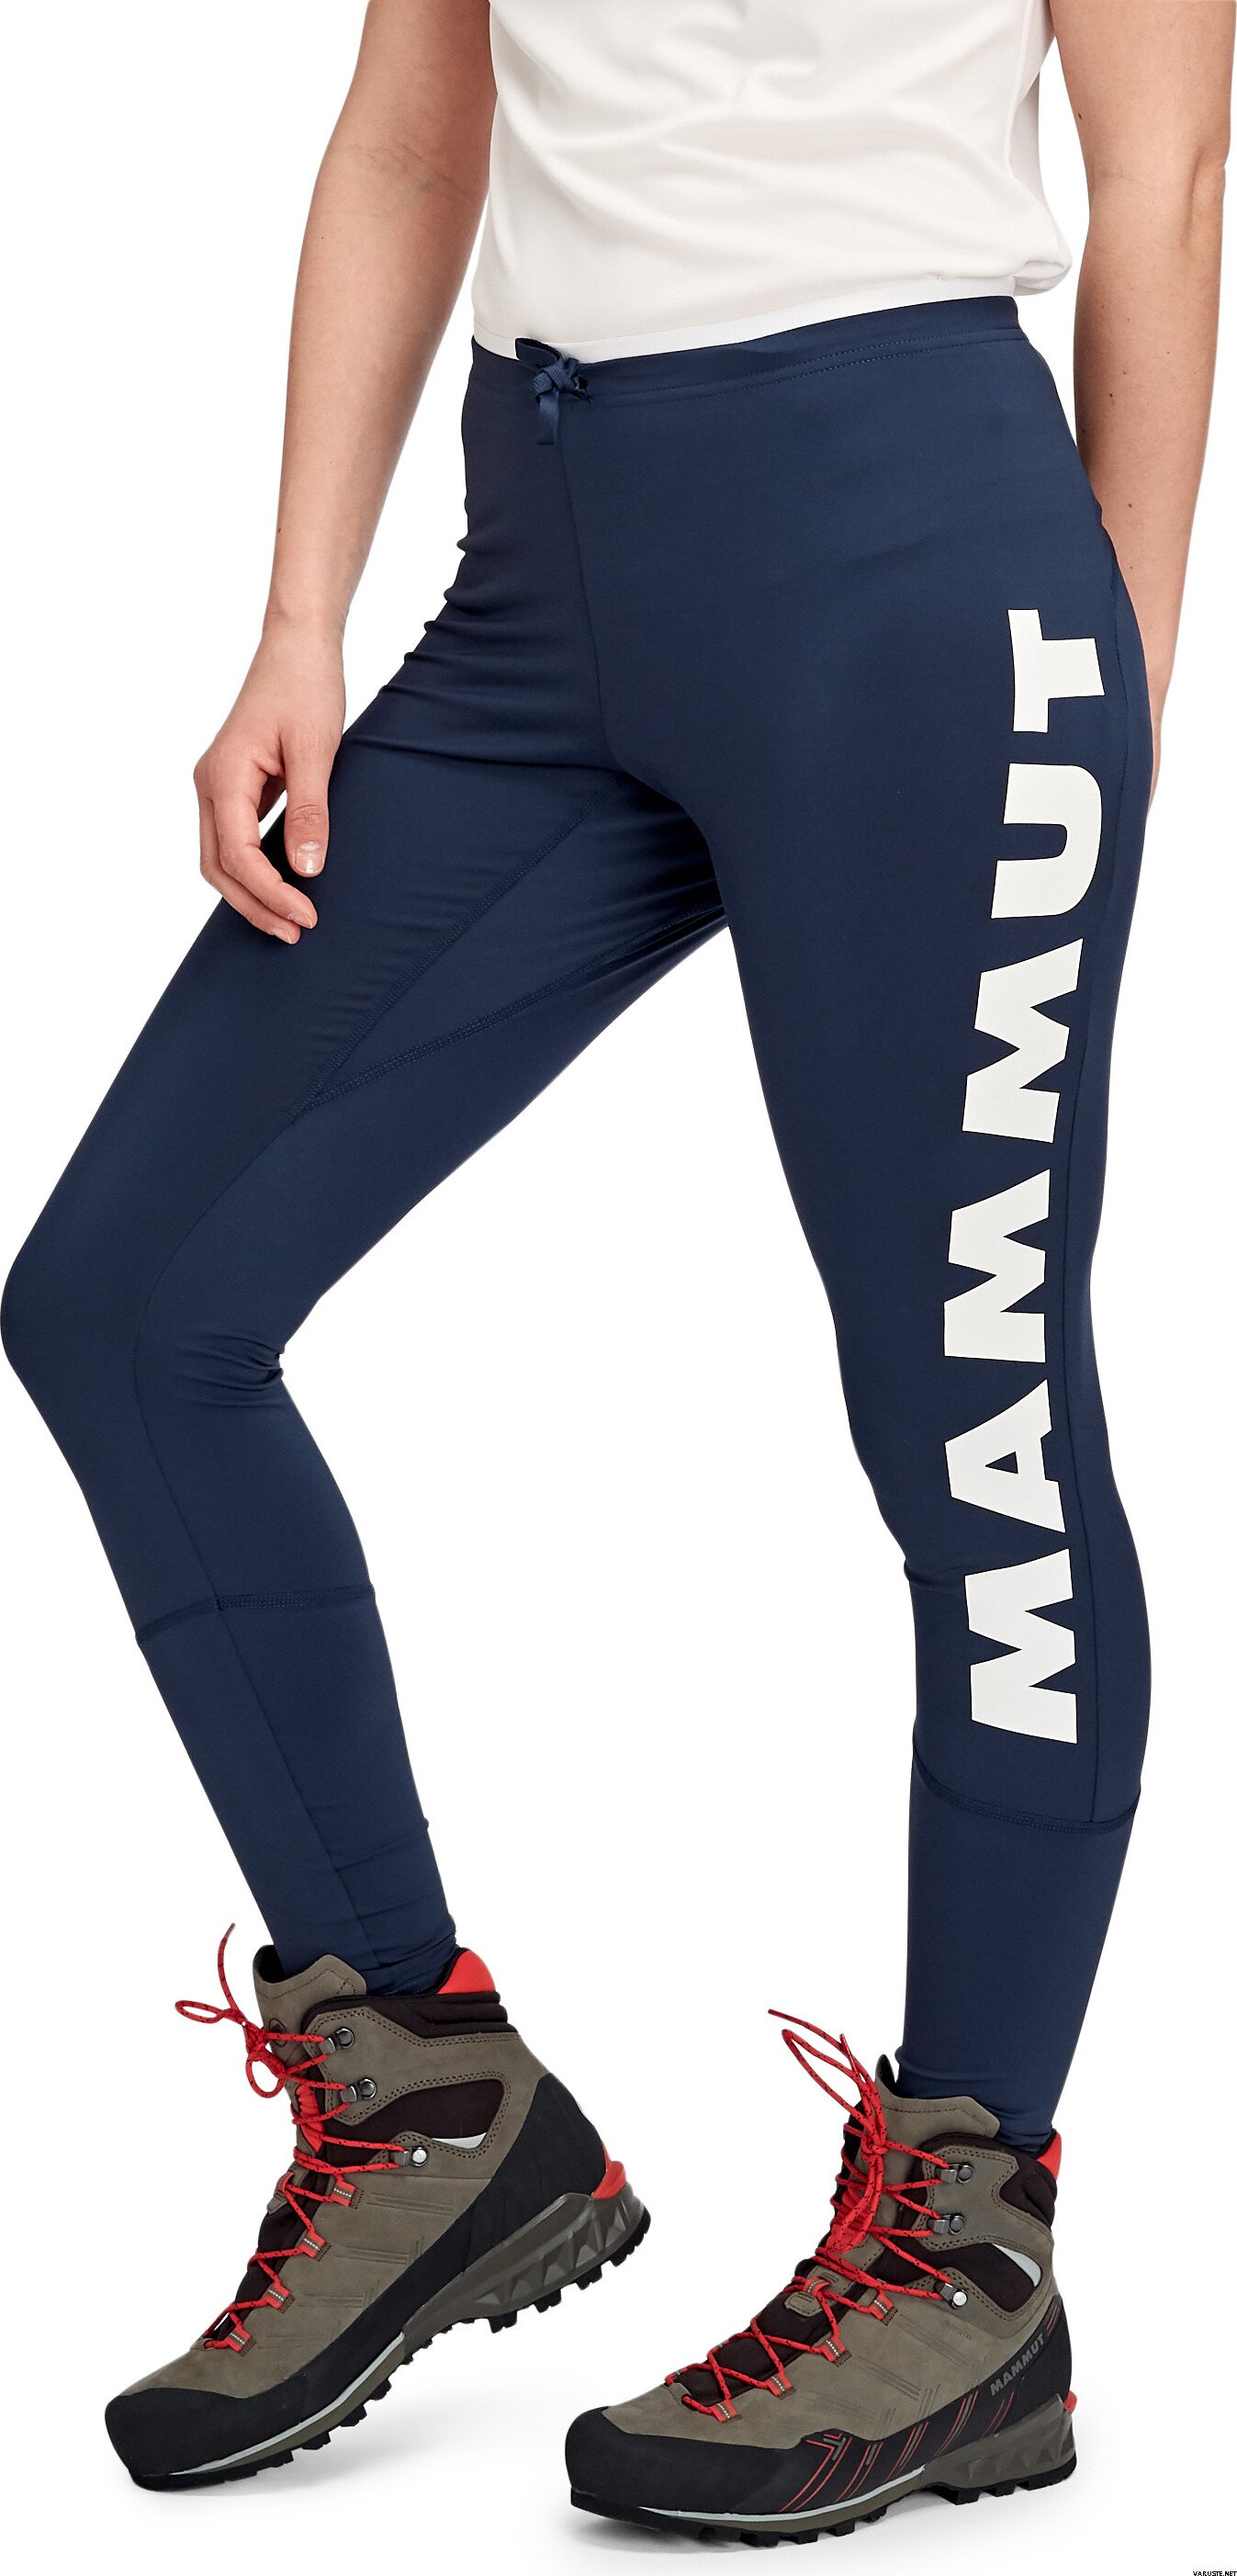 Mammut Sertig Tights Women | Women's Running Pants | Varuste.net 日本語